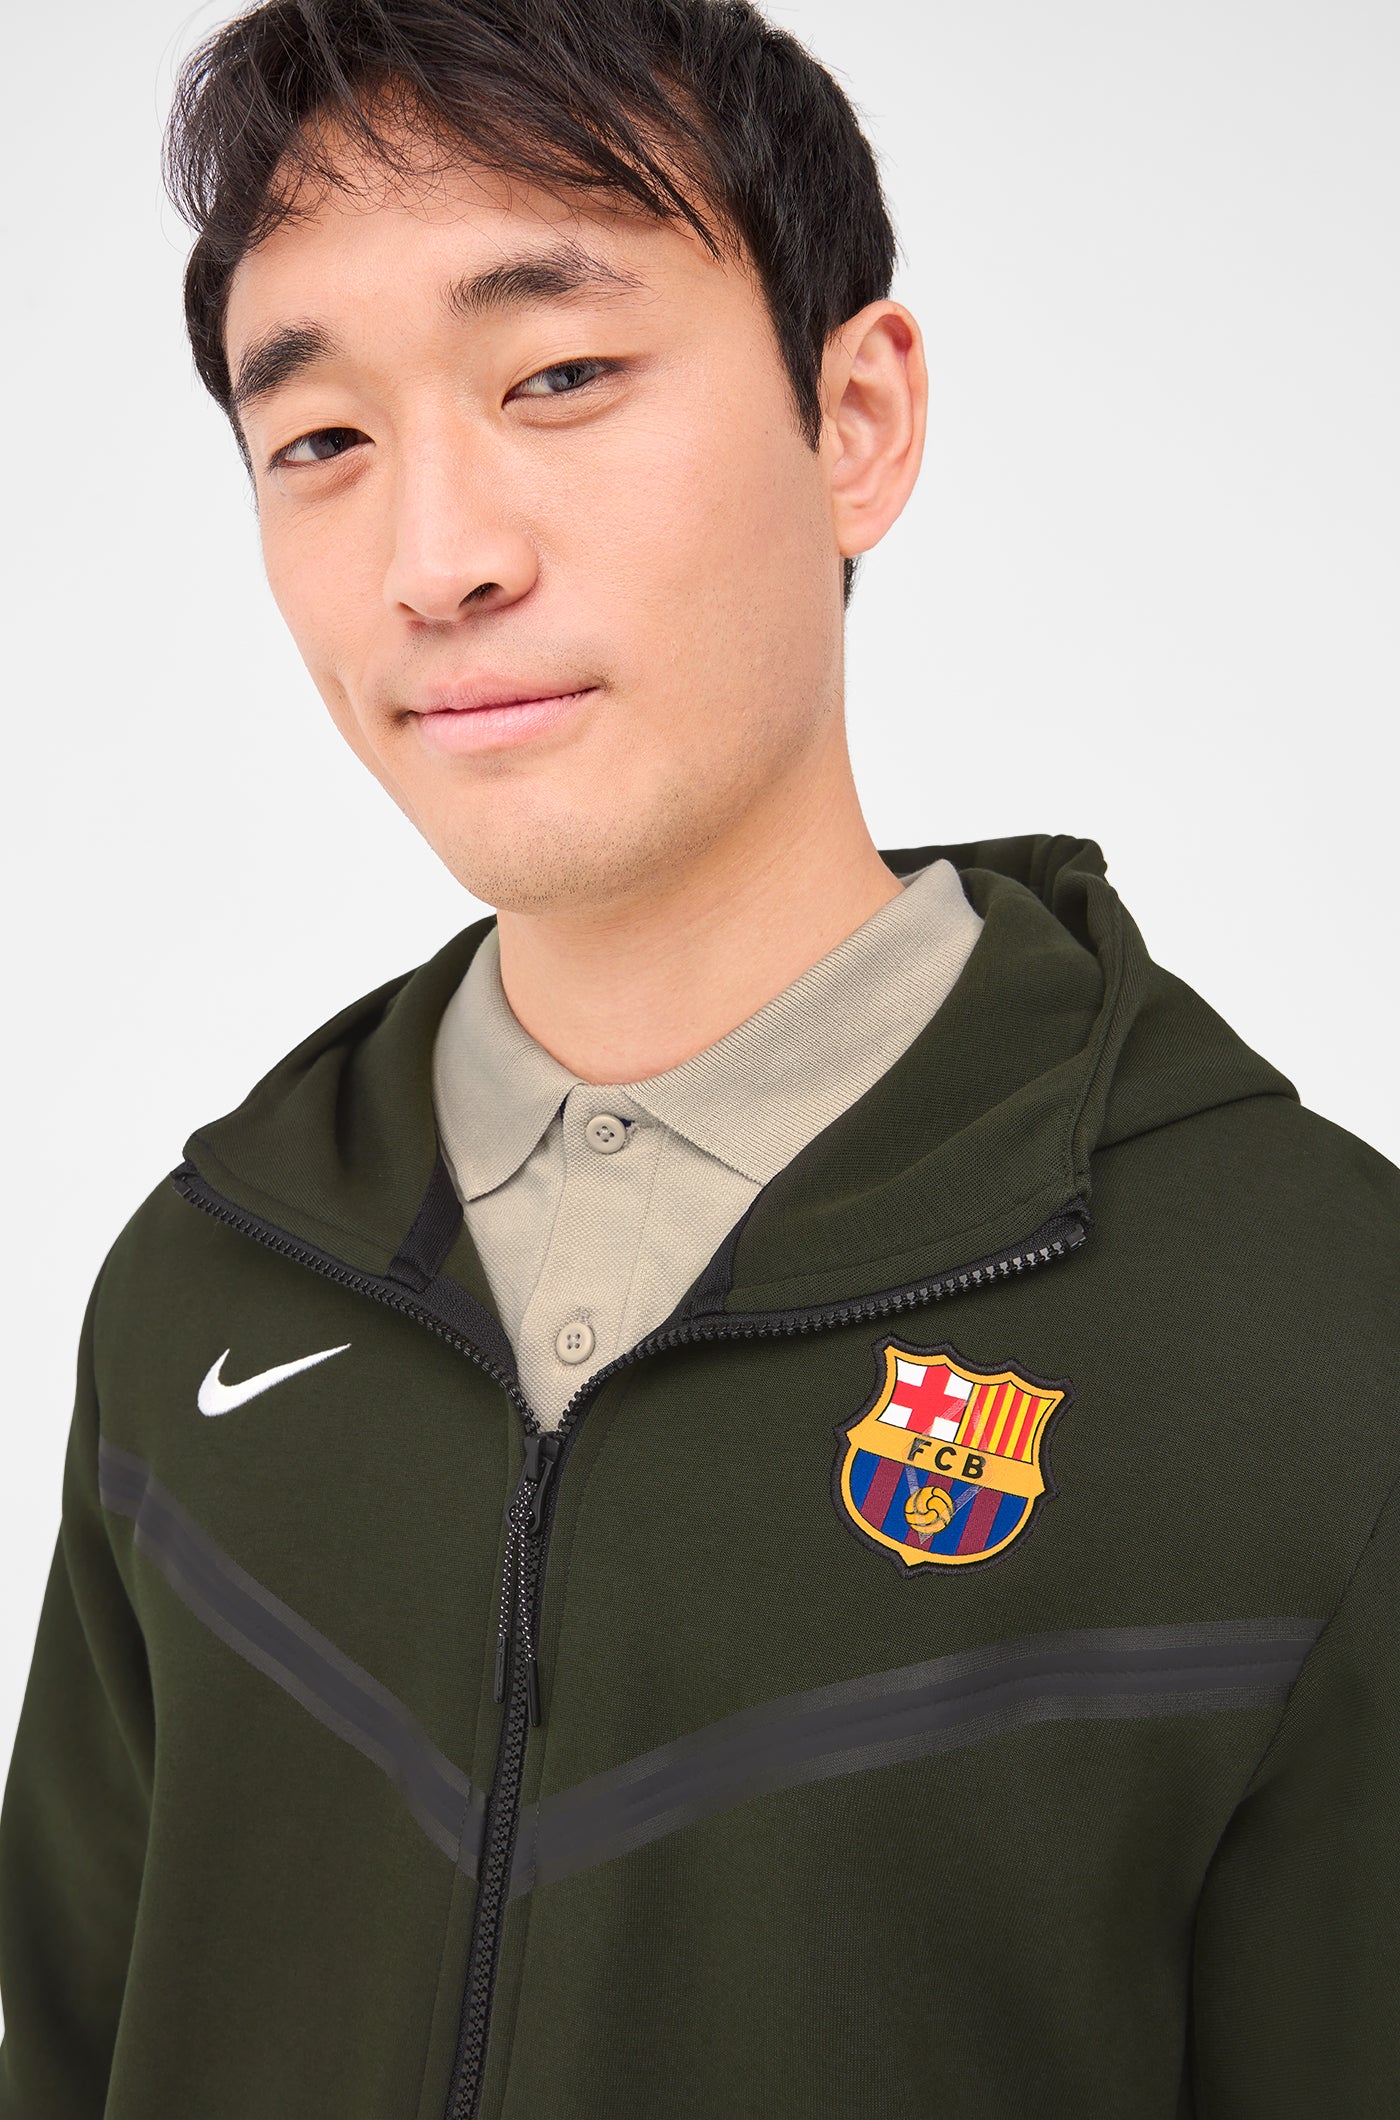 derrochador chupar Mes Tech Barça Nike Jacket – Barça Official Store Spotify Camp Nou